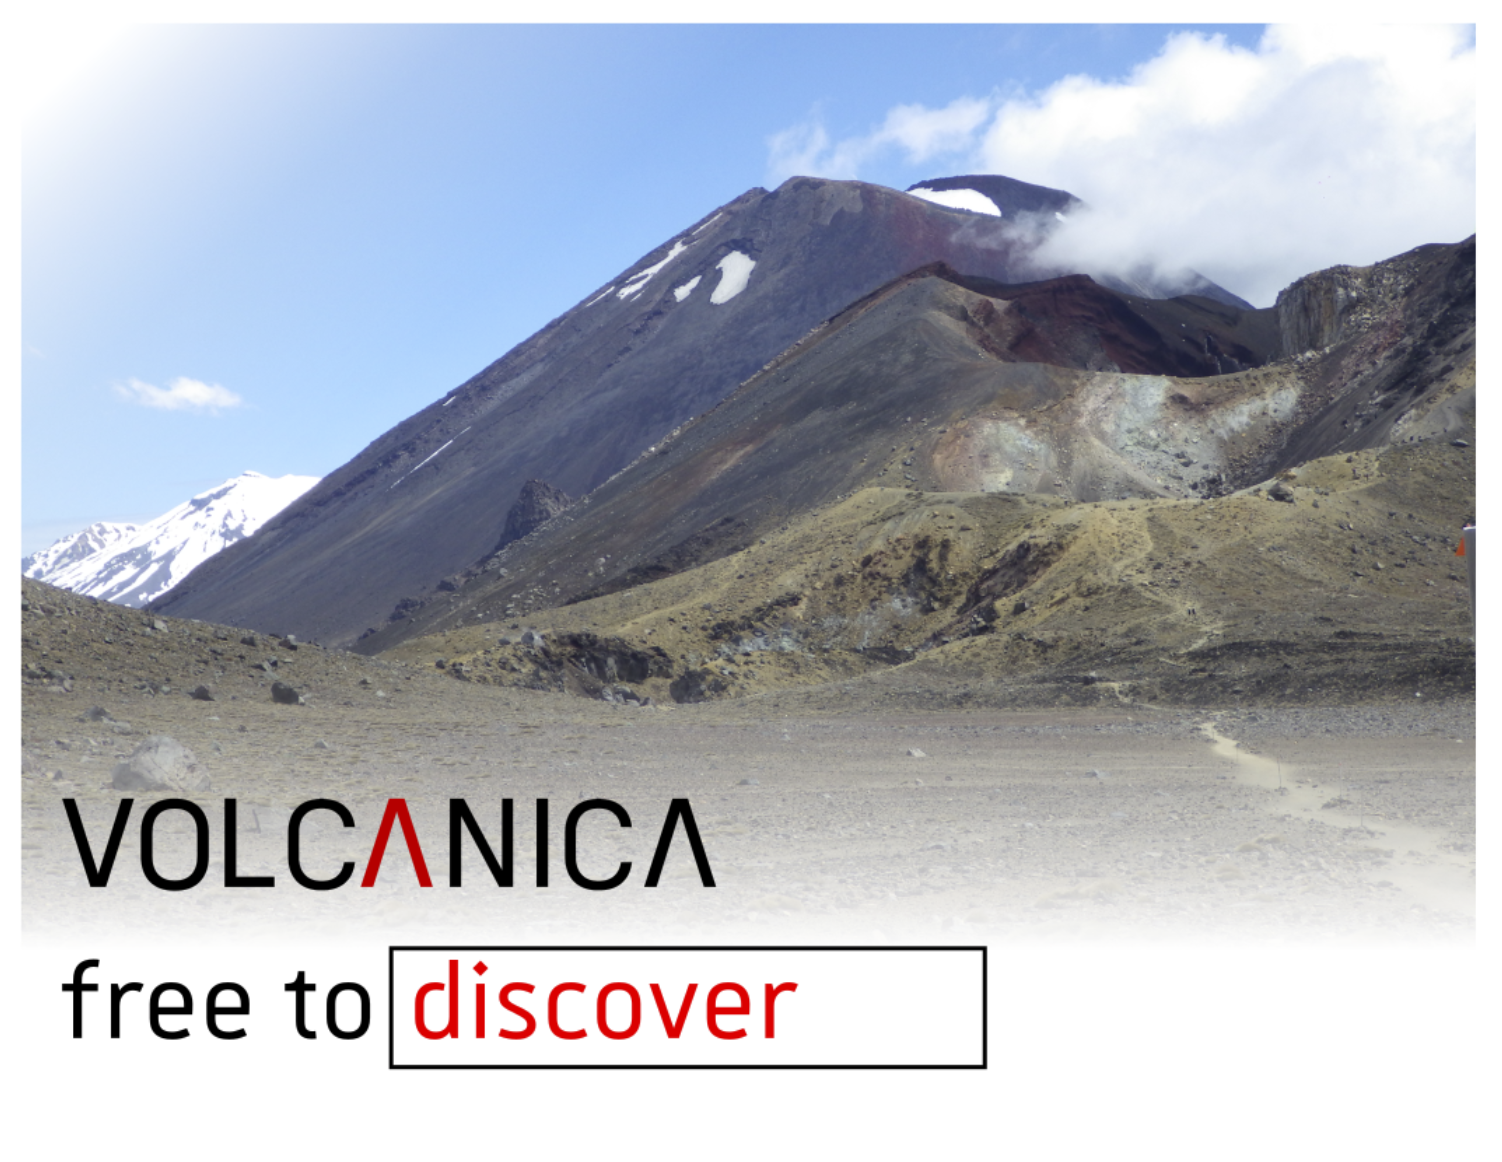 Volcanica journal website https://www.jvolcanica.org